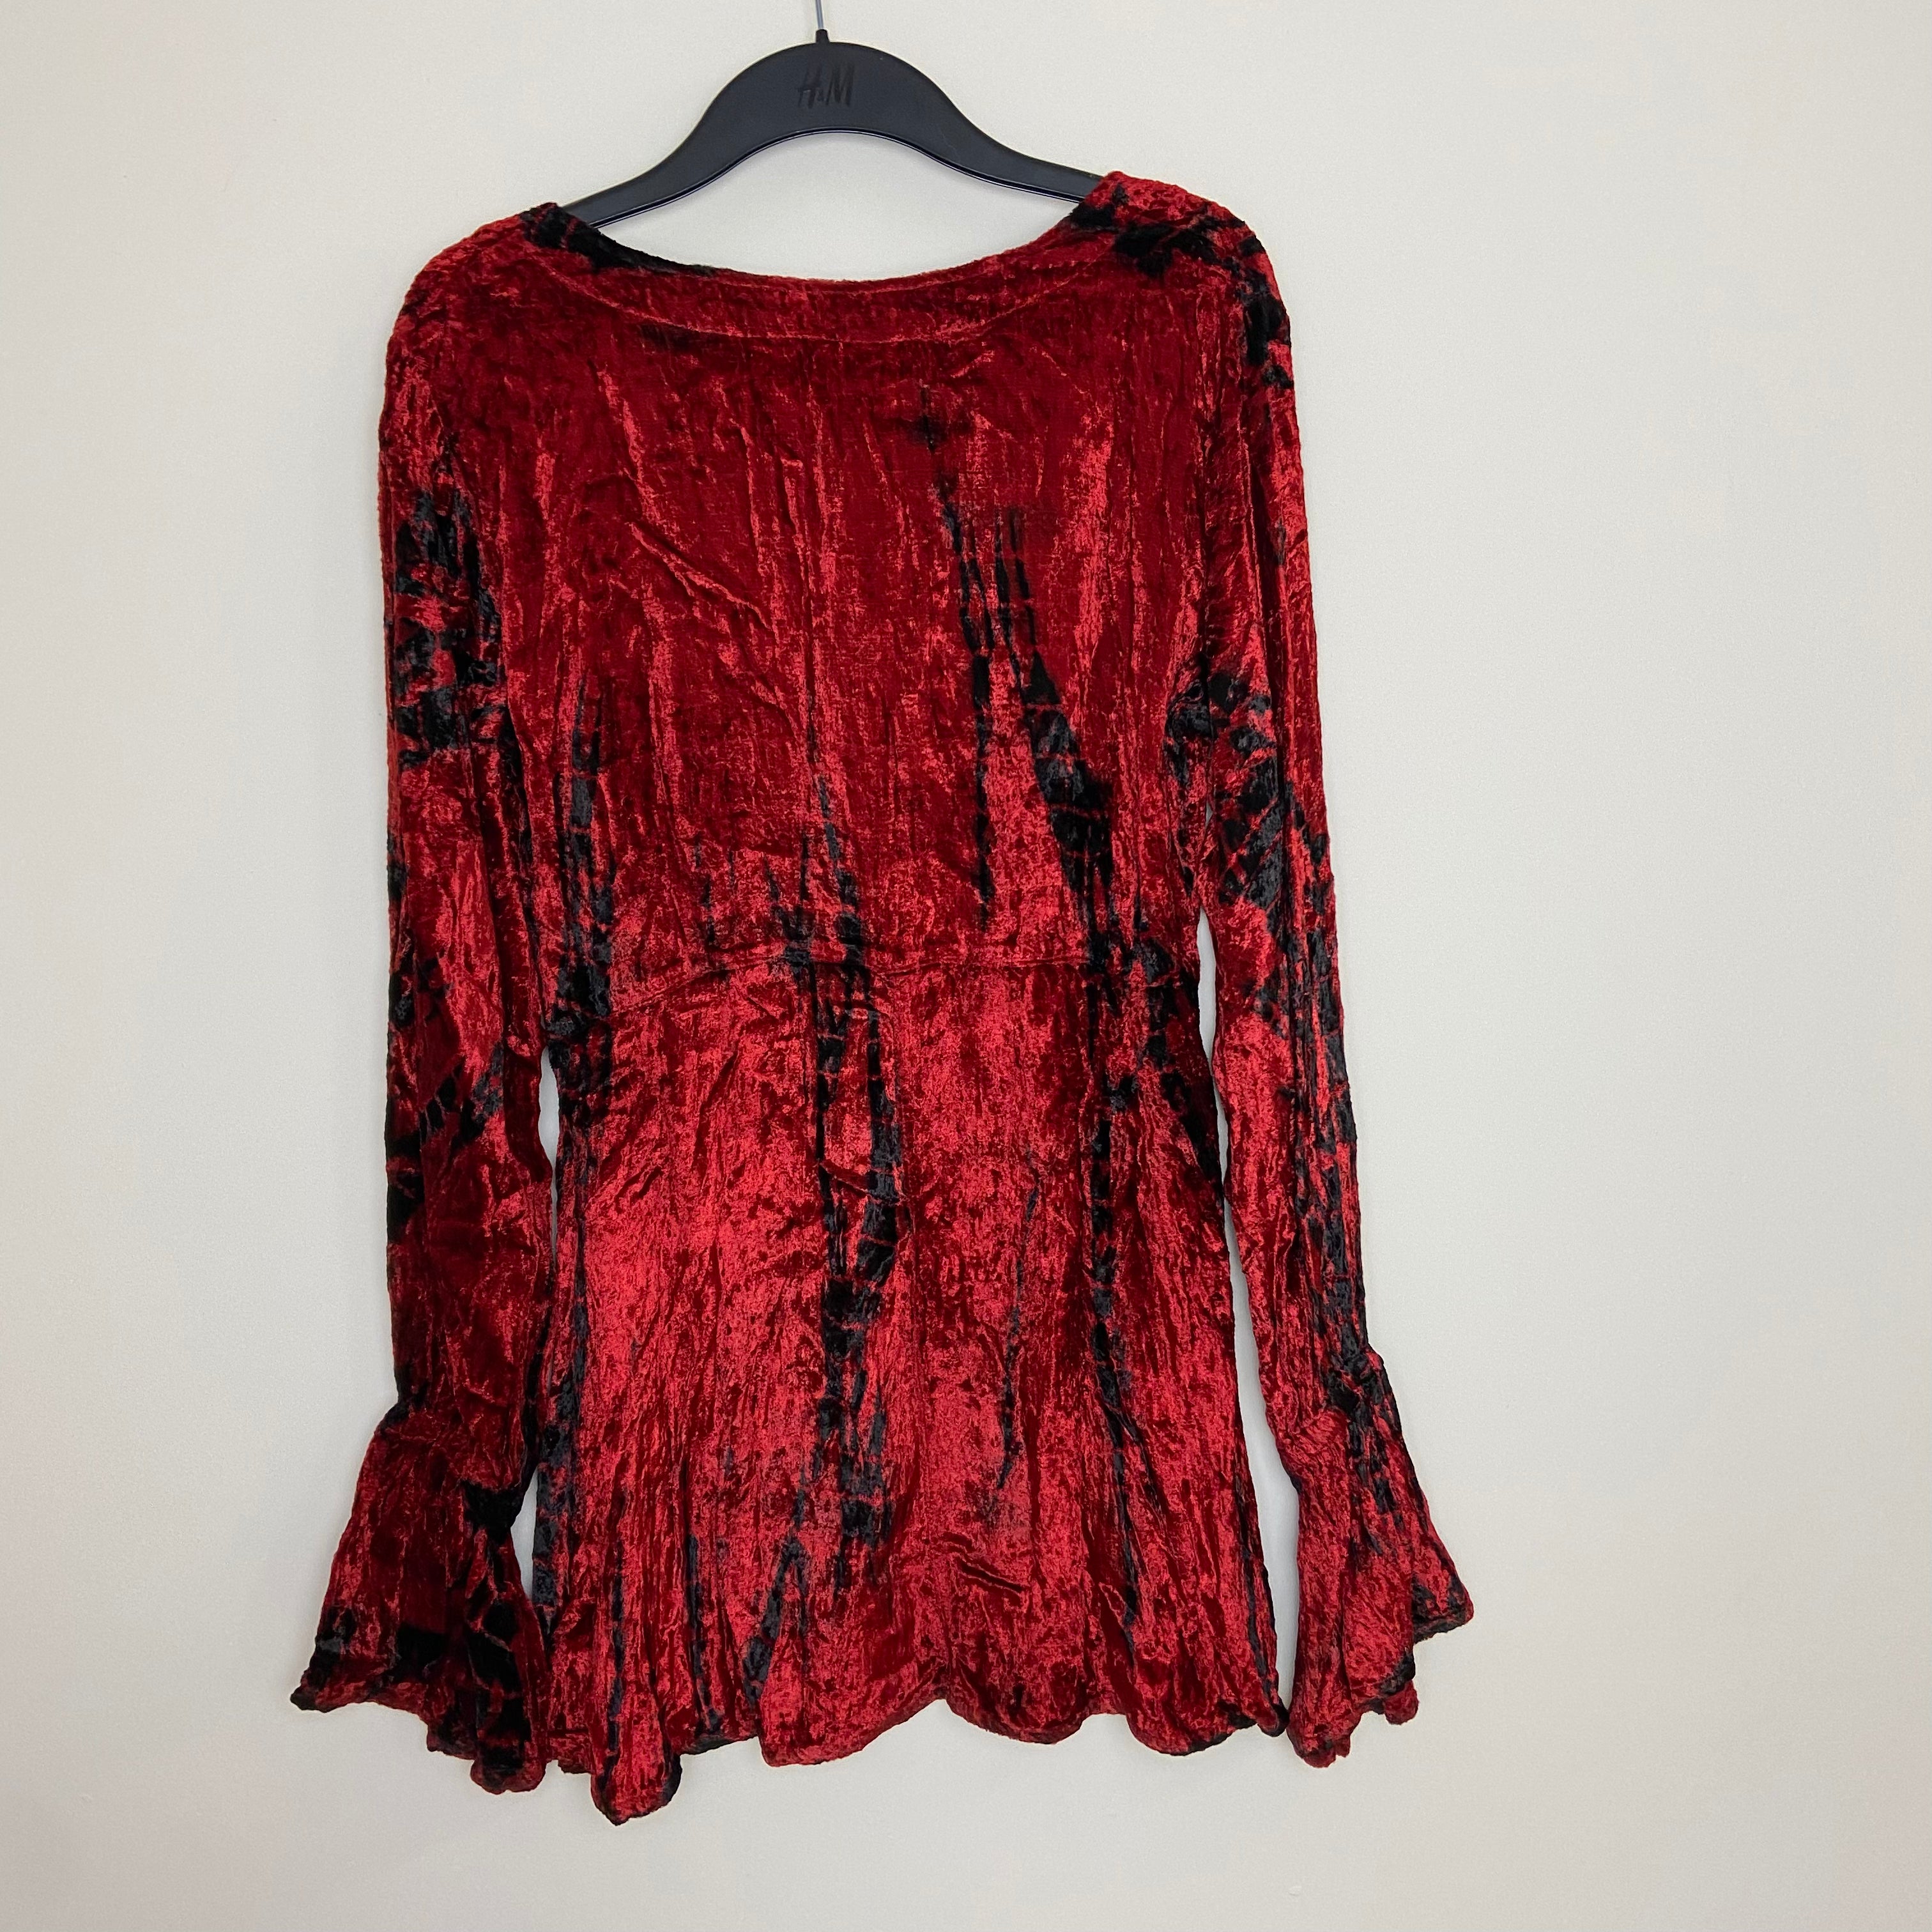 Velvet Tie Dye Cardigan - Red & Black